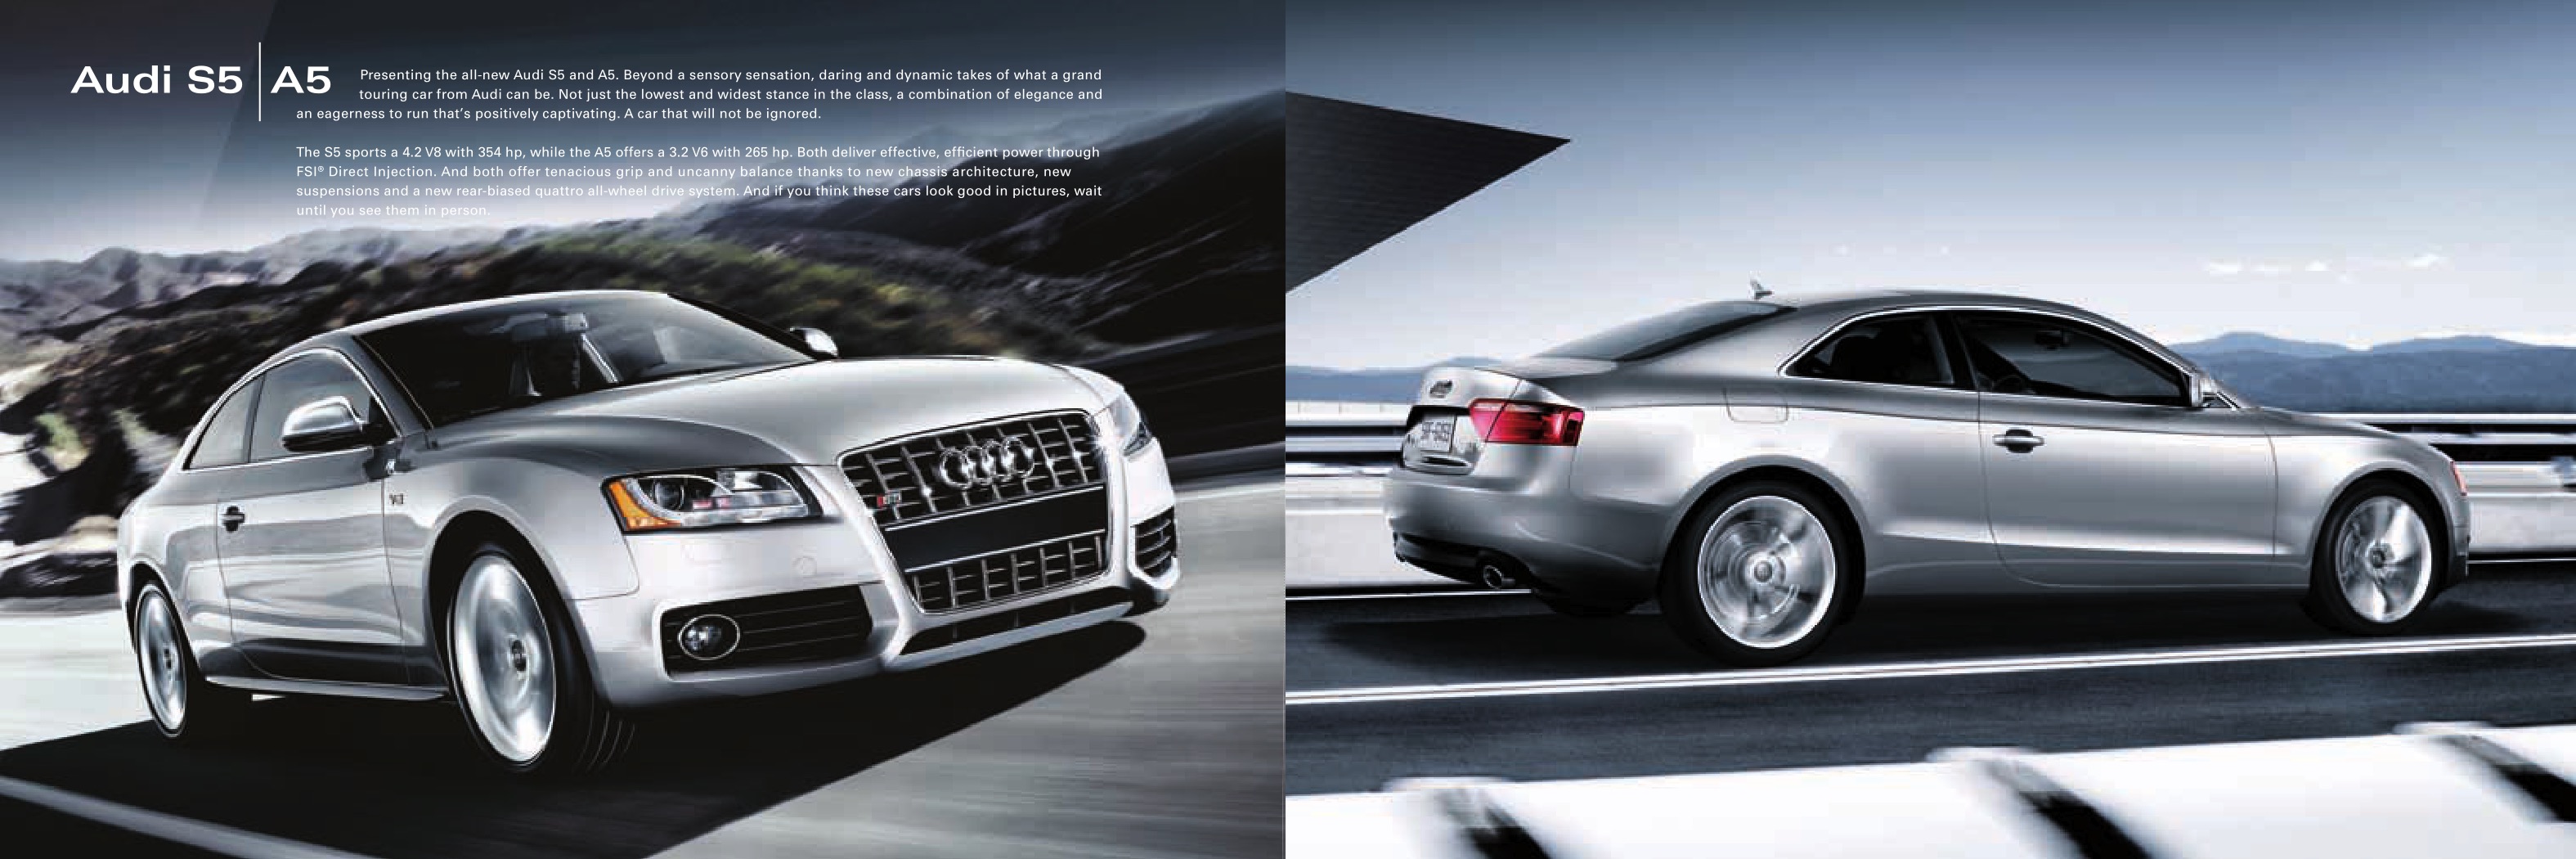 2008 Audi Brochure Page 1